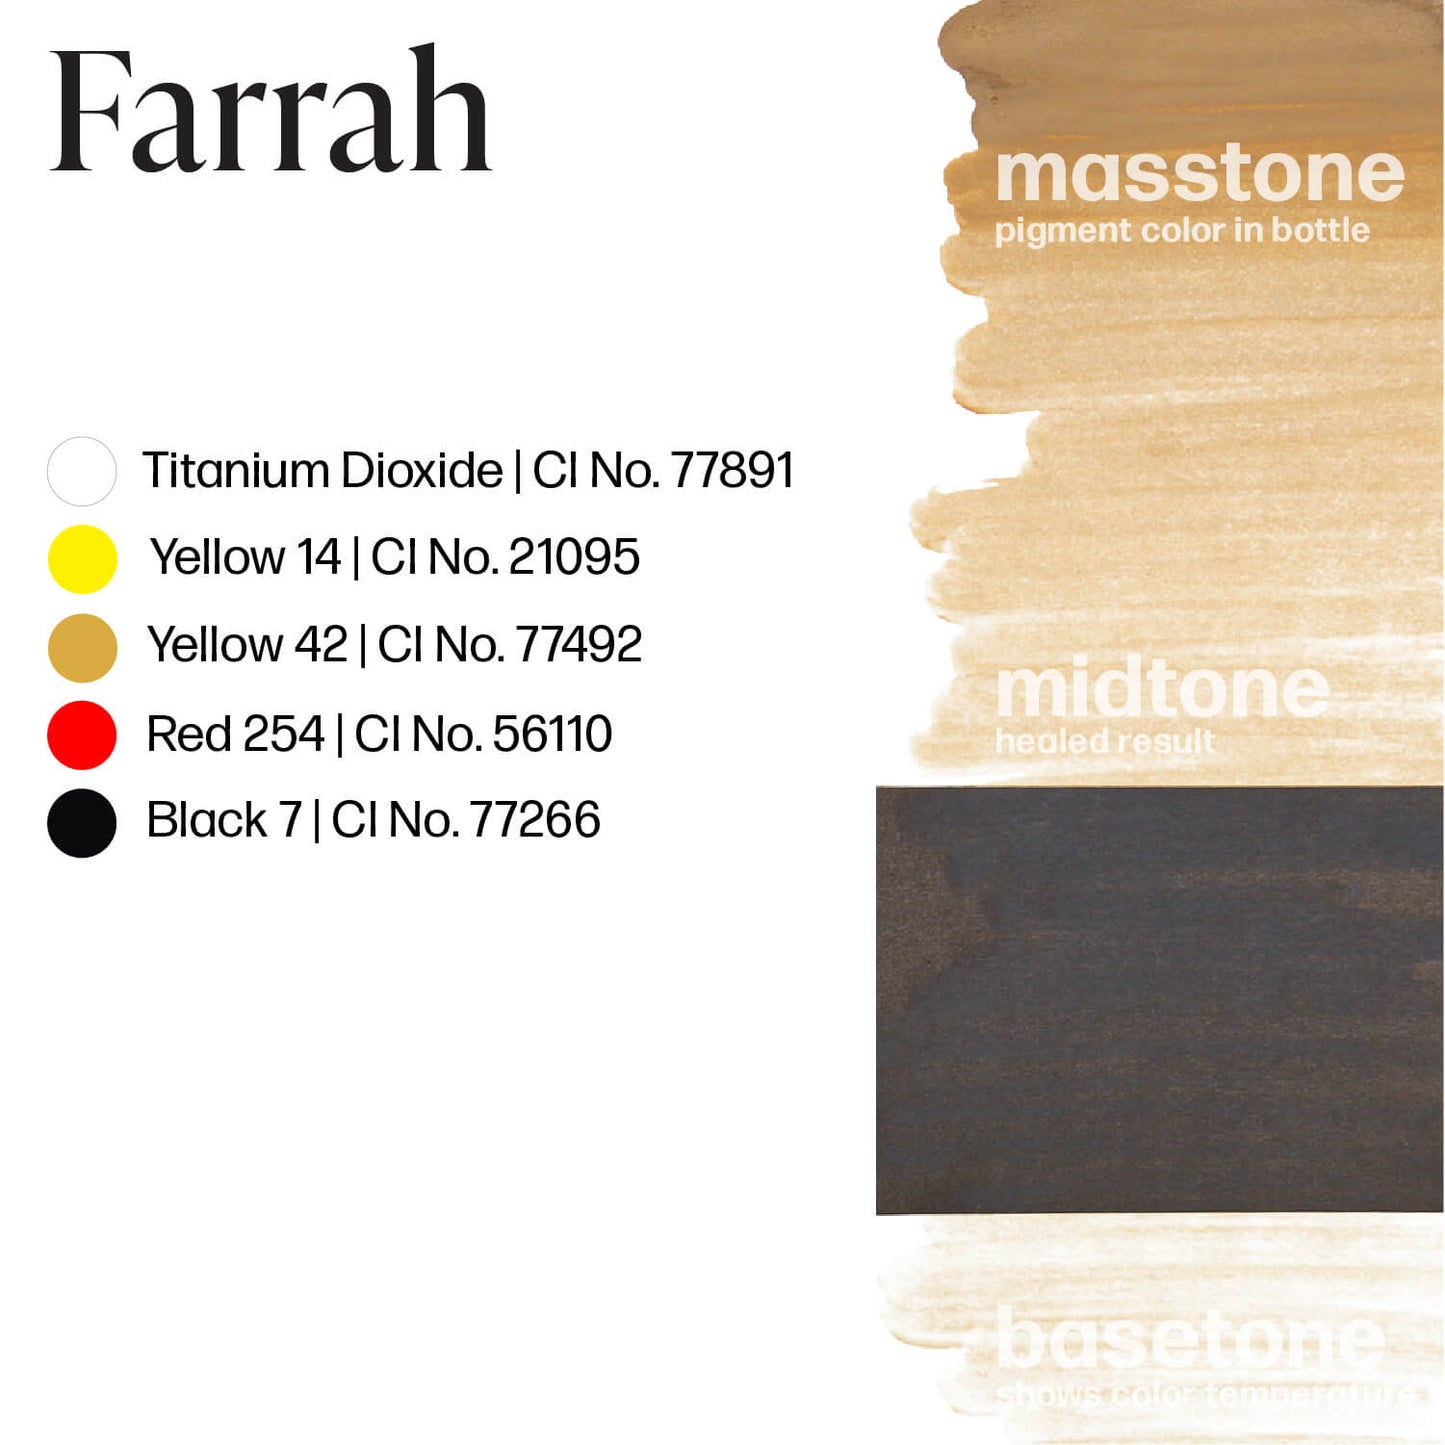 Perma Blend Farrah Brow Ink Drawdown Masstone Midtone Basetone